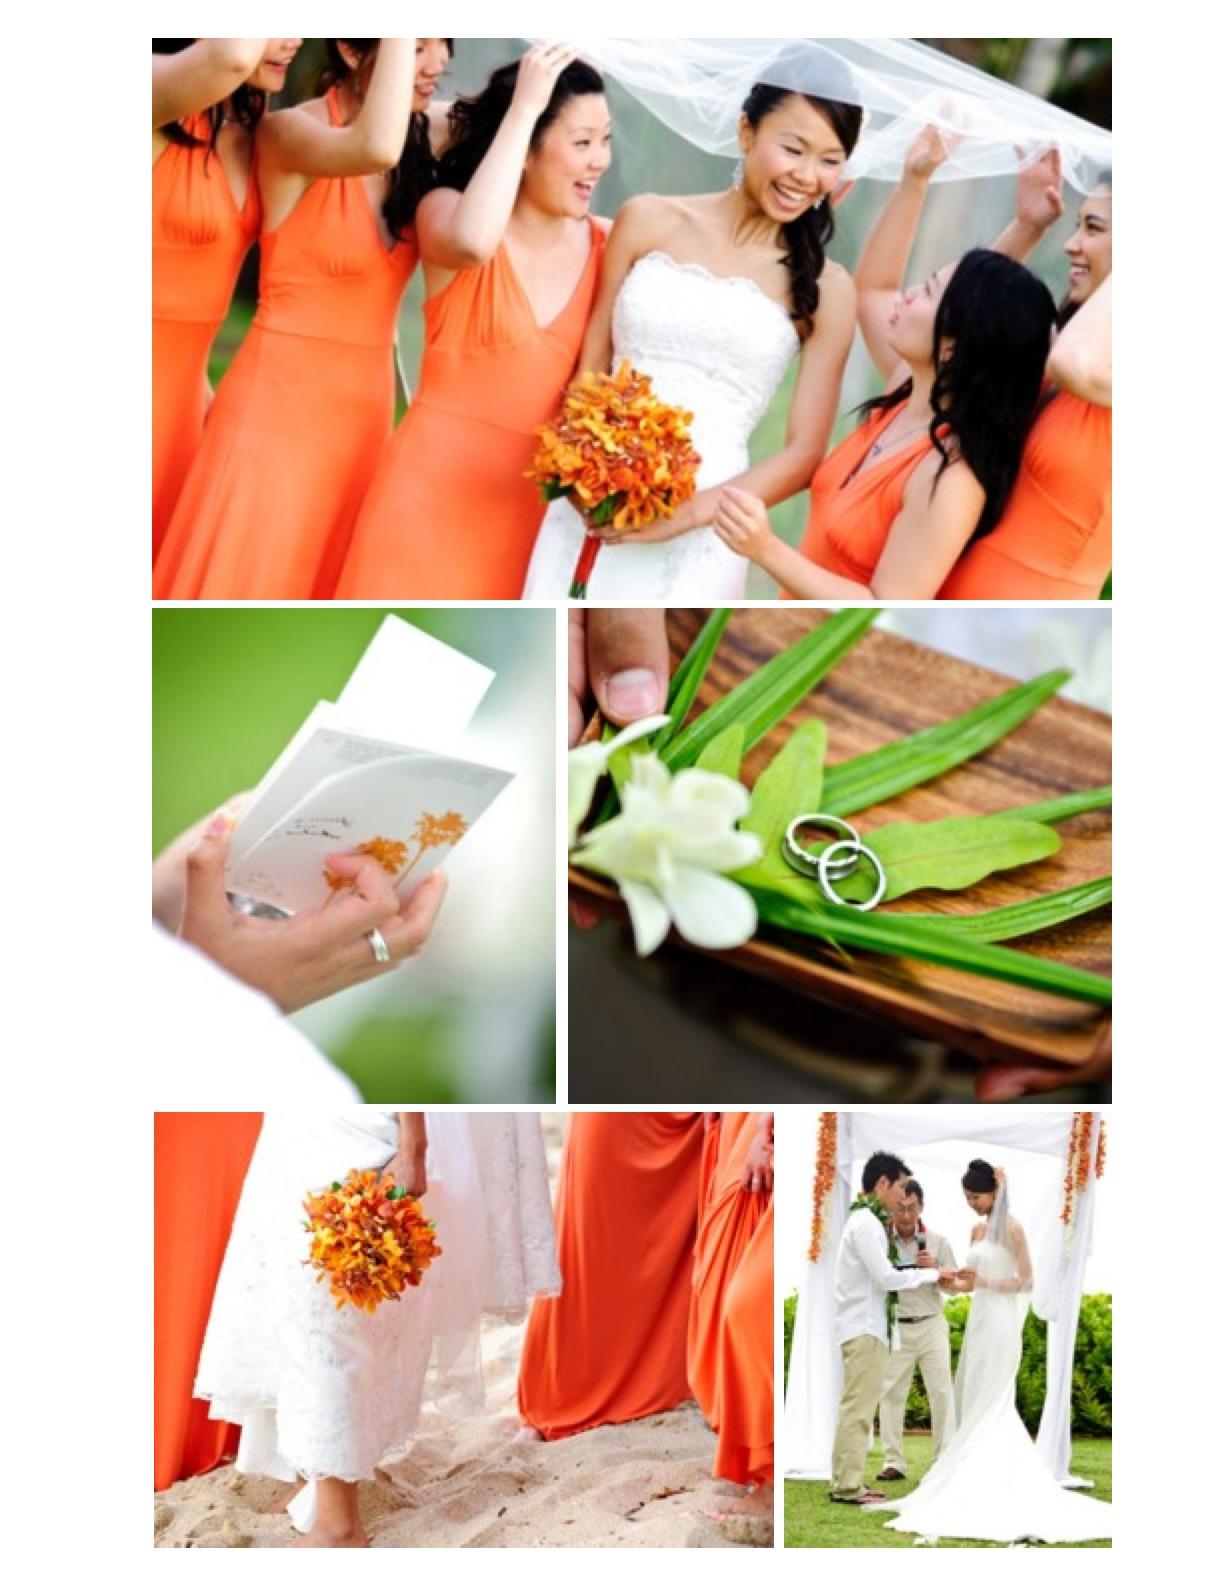 Tags: lanikuhonua, wedding